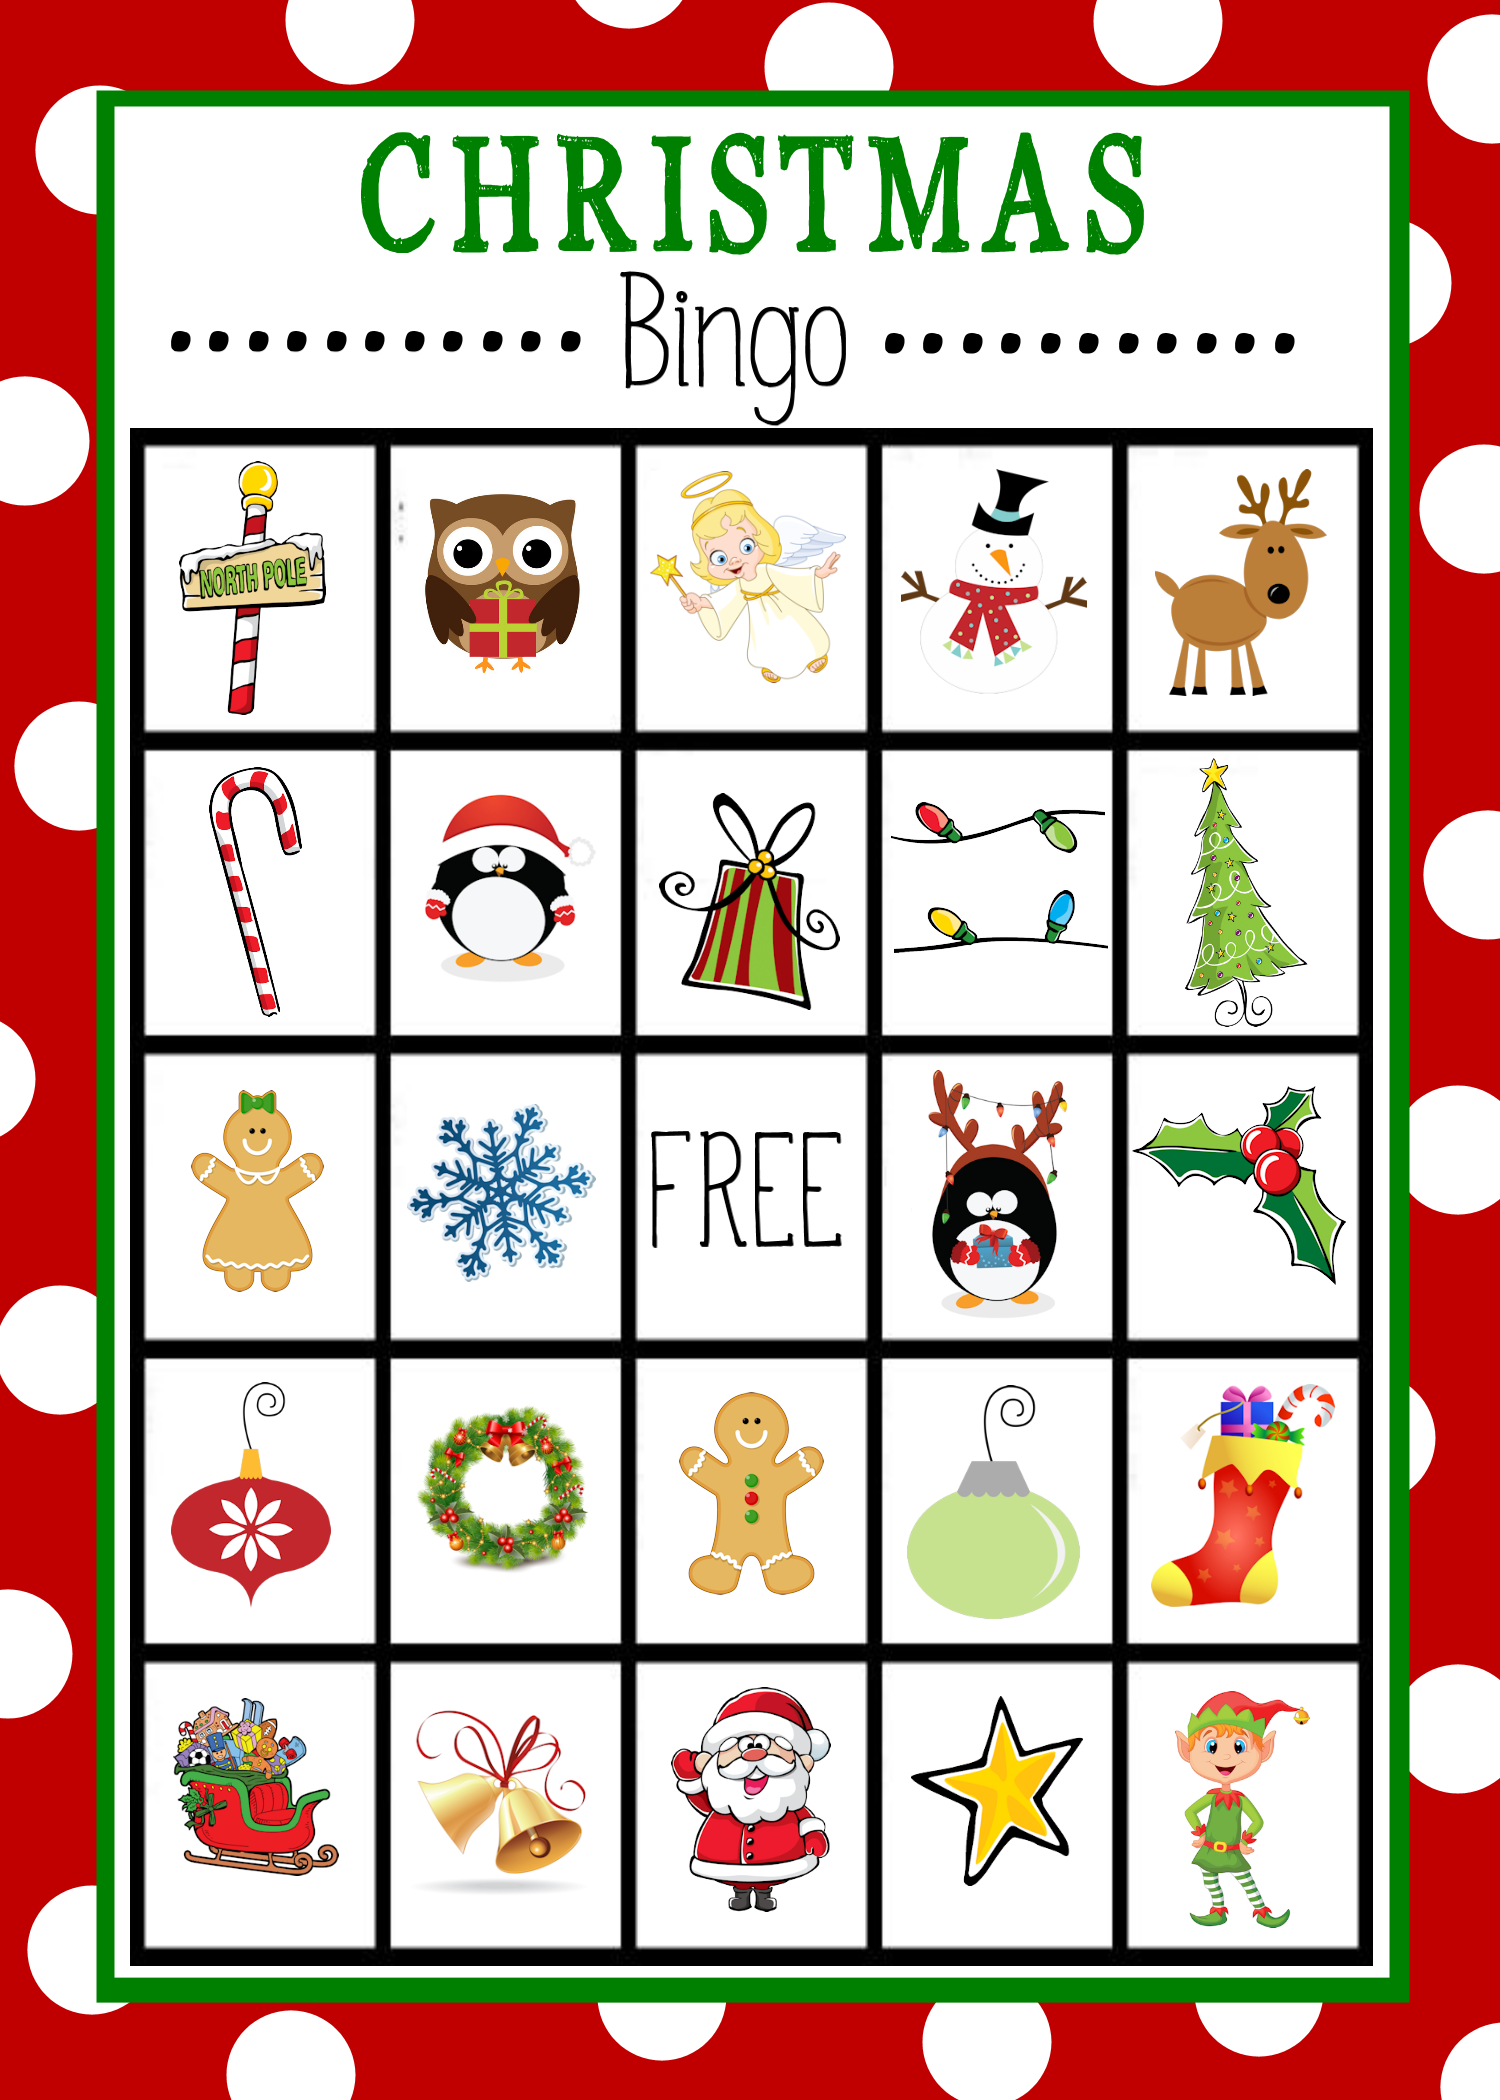 imagesbykim-bingo-cards-games-10-items